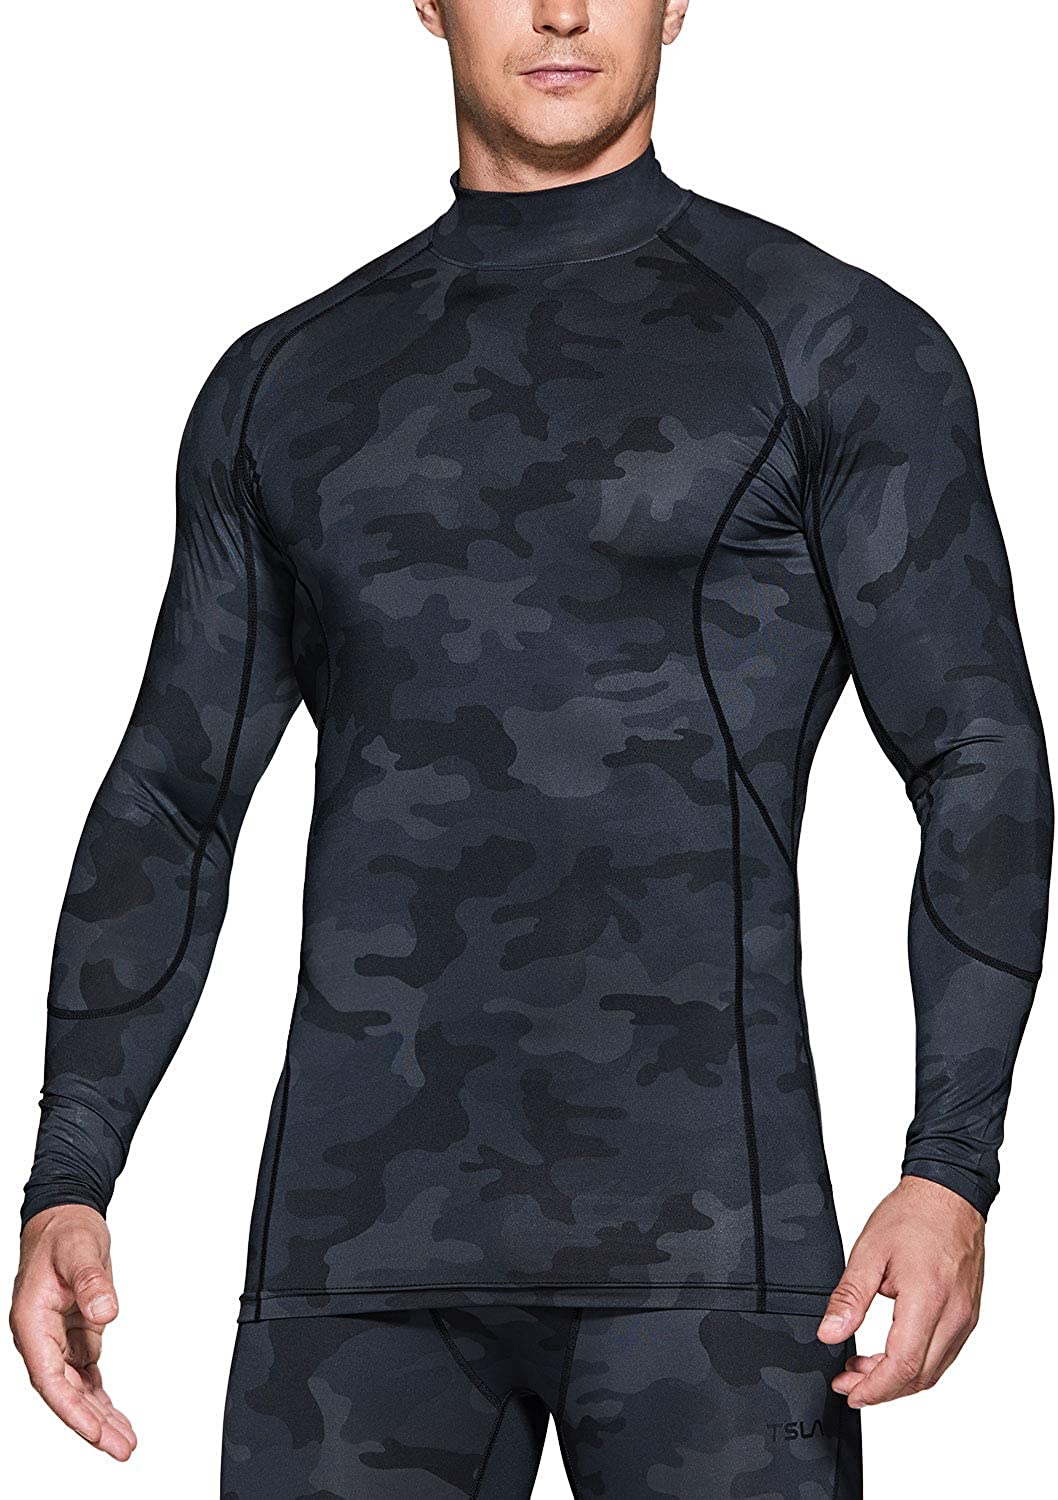 TSLA Mens Mock Long-Sleeved T-Shirt Cool Dry Compression Baselayer Top